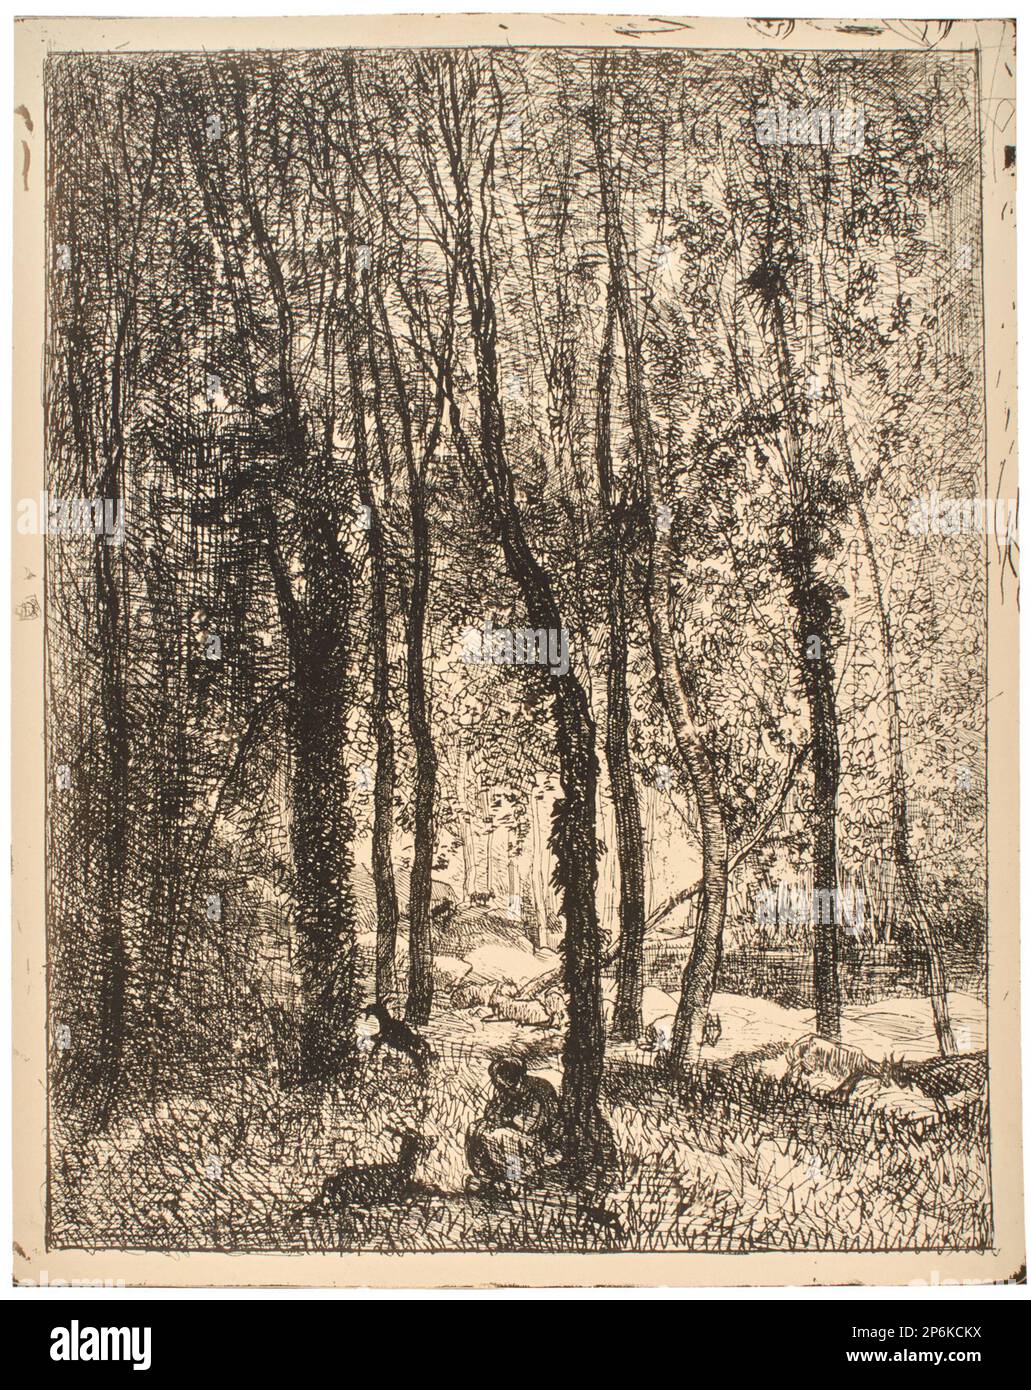 Charles-François Daubigny, The Goatherd (Le Gardeuse de Chèvres), 1862, printed 1921, cliché-verre, gelatin printing-out print. Stock Photo